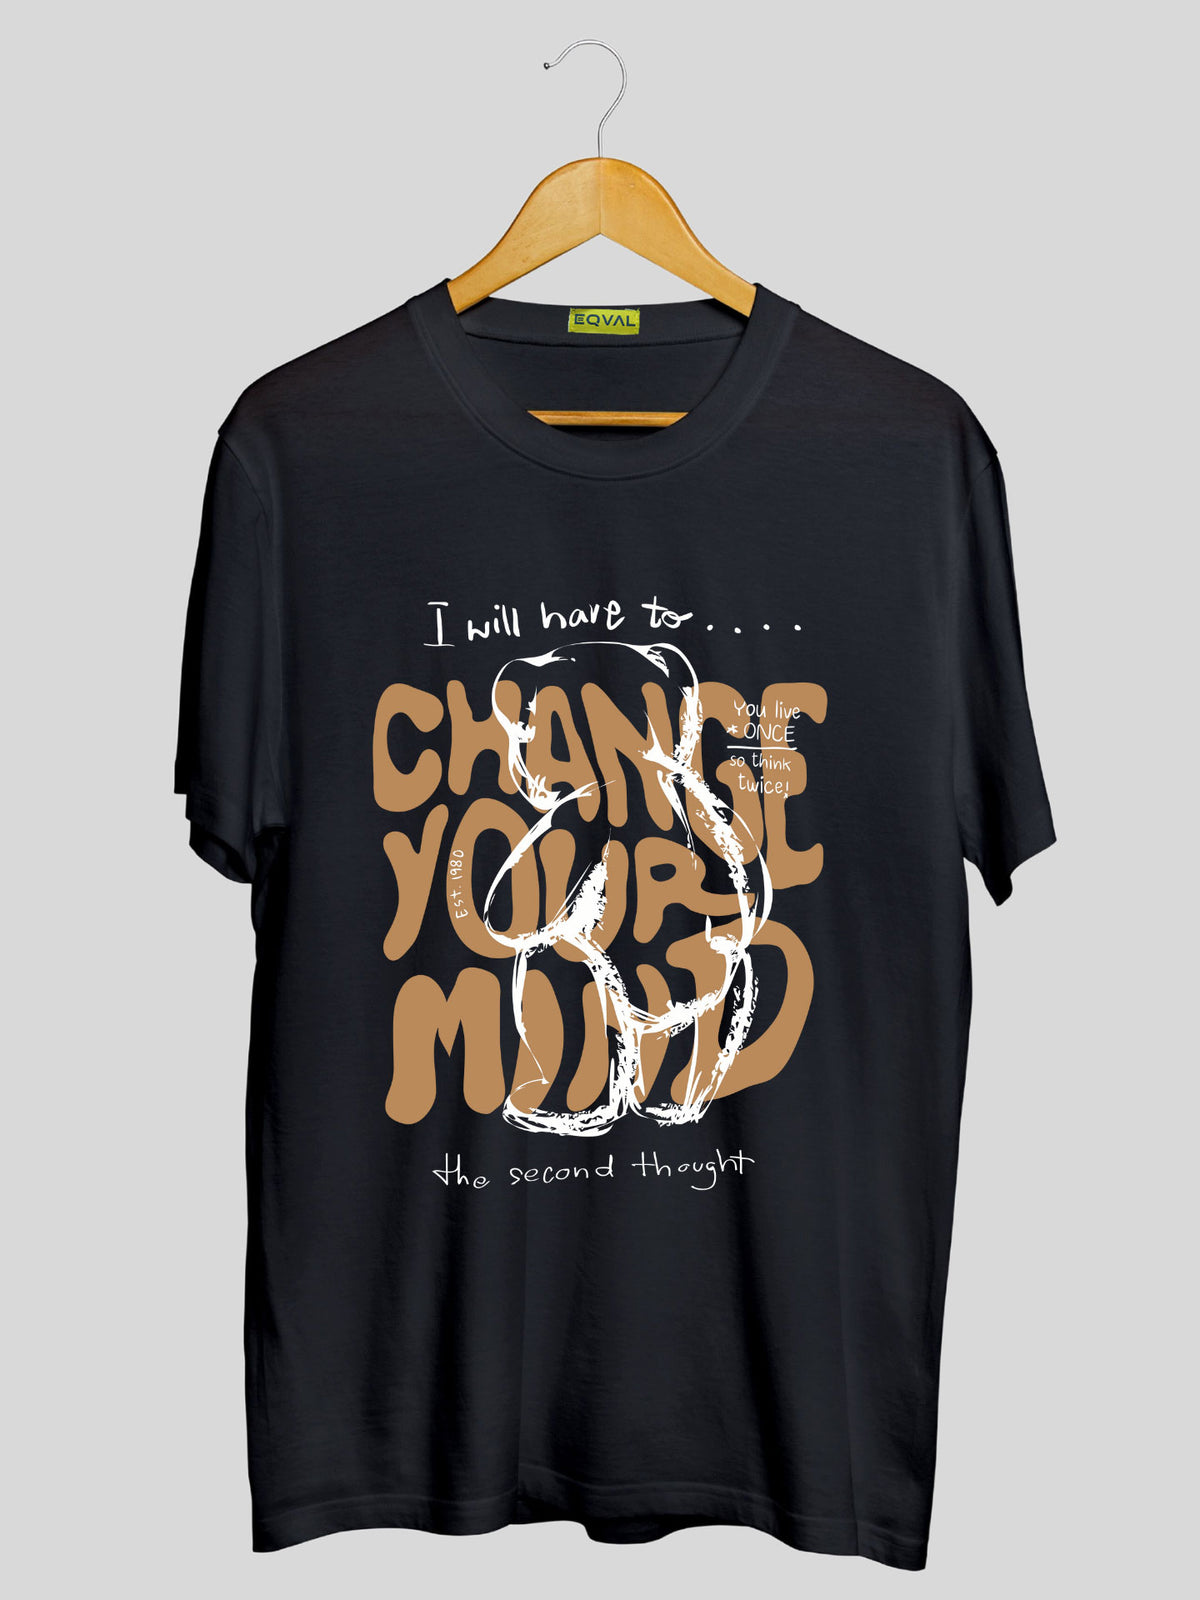 Men's Black Change Your Mind Printed T-shirt